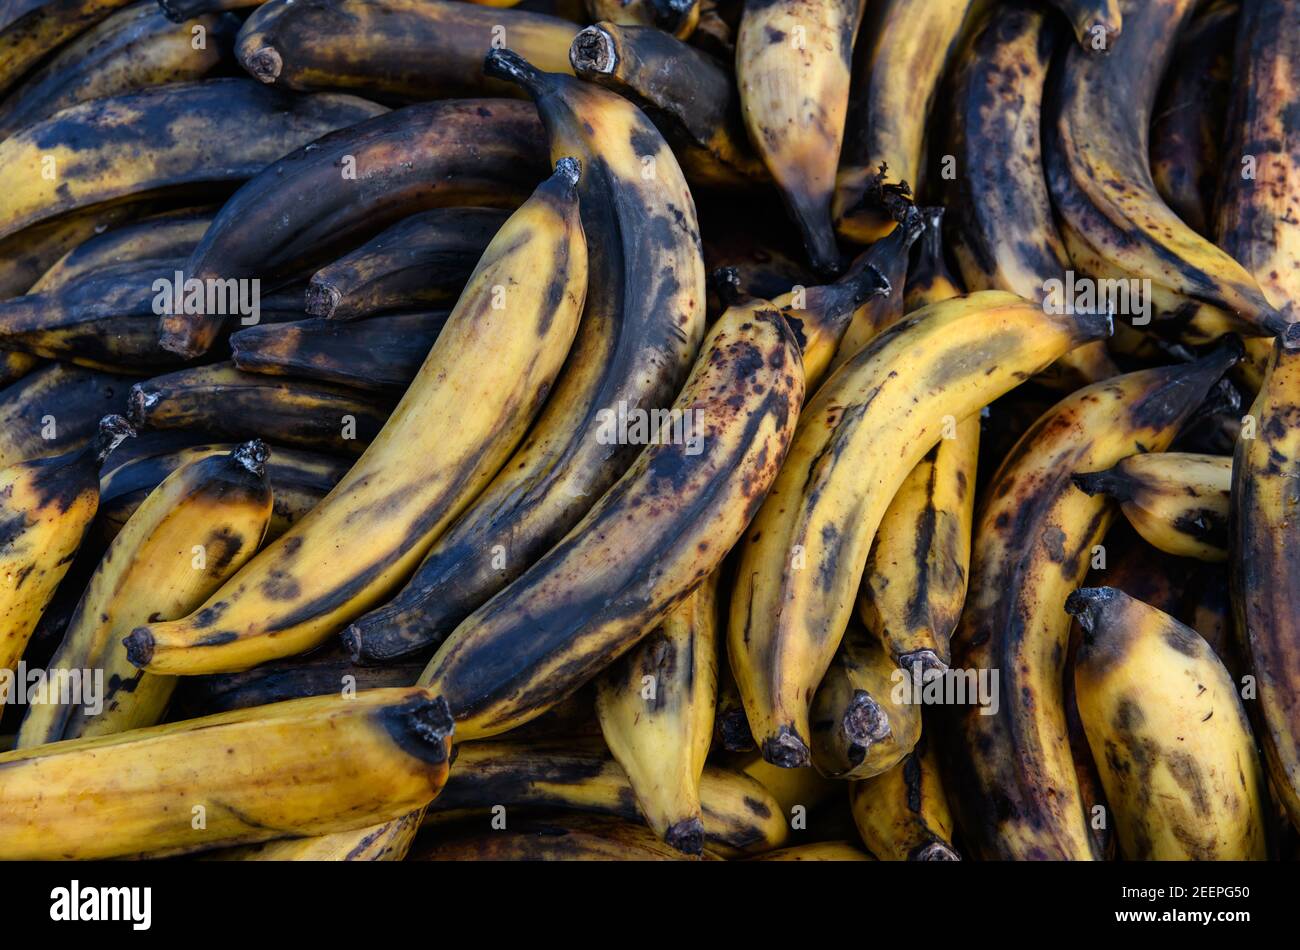 Food waste - Over ripe bananas in a food waste bin at Birmingham Wholesale Markets, Birmingham, England, UK Stock Photo